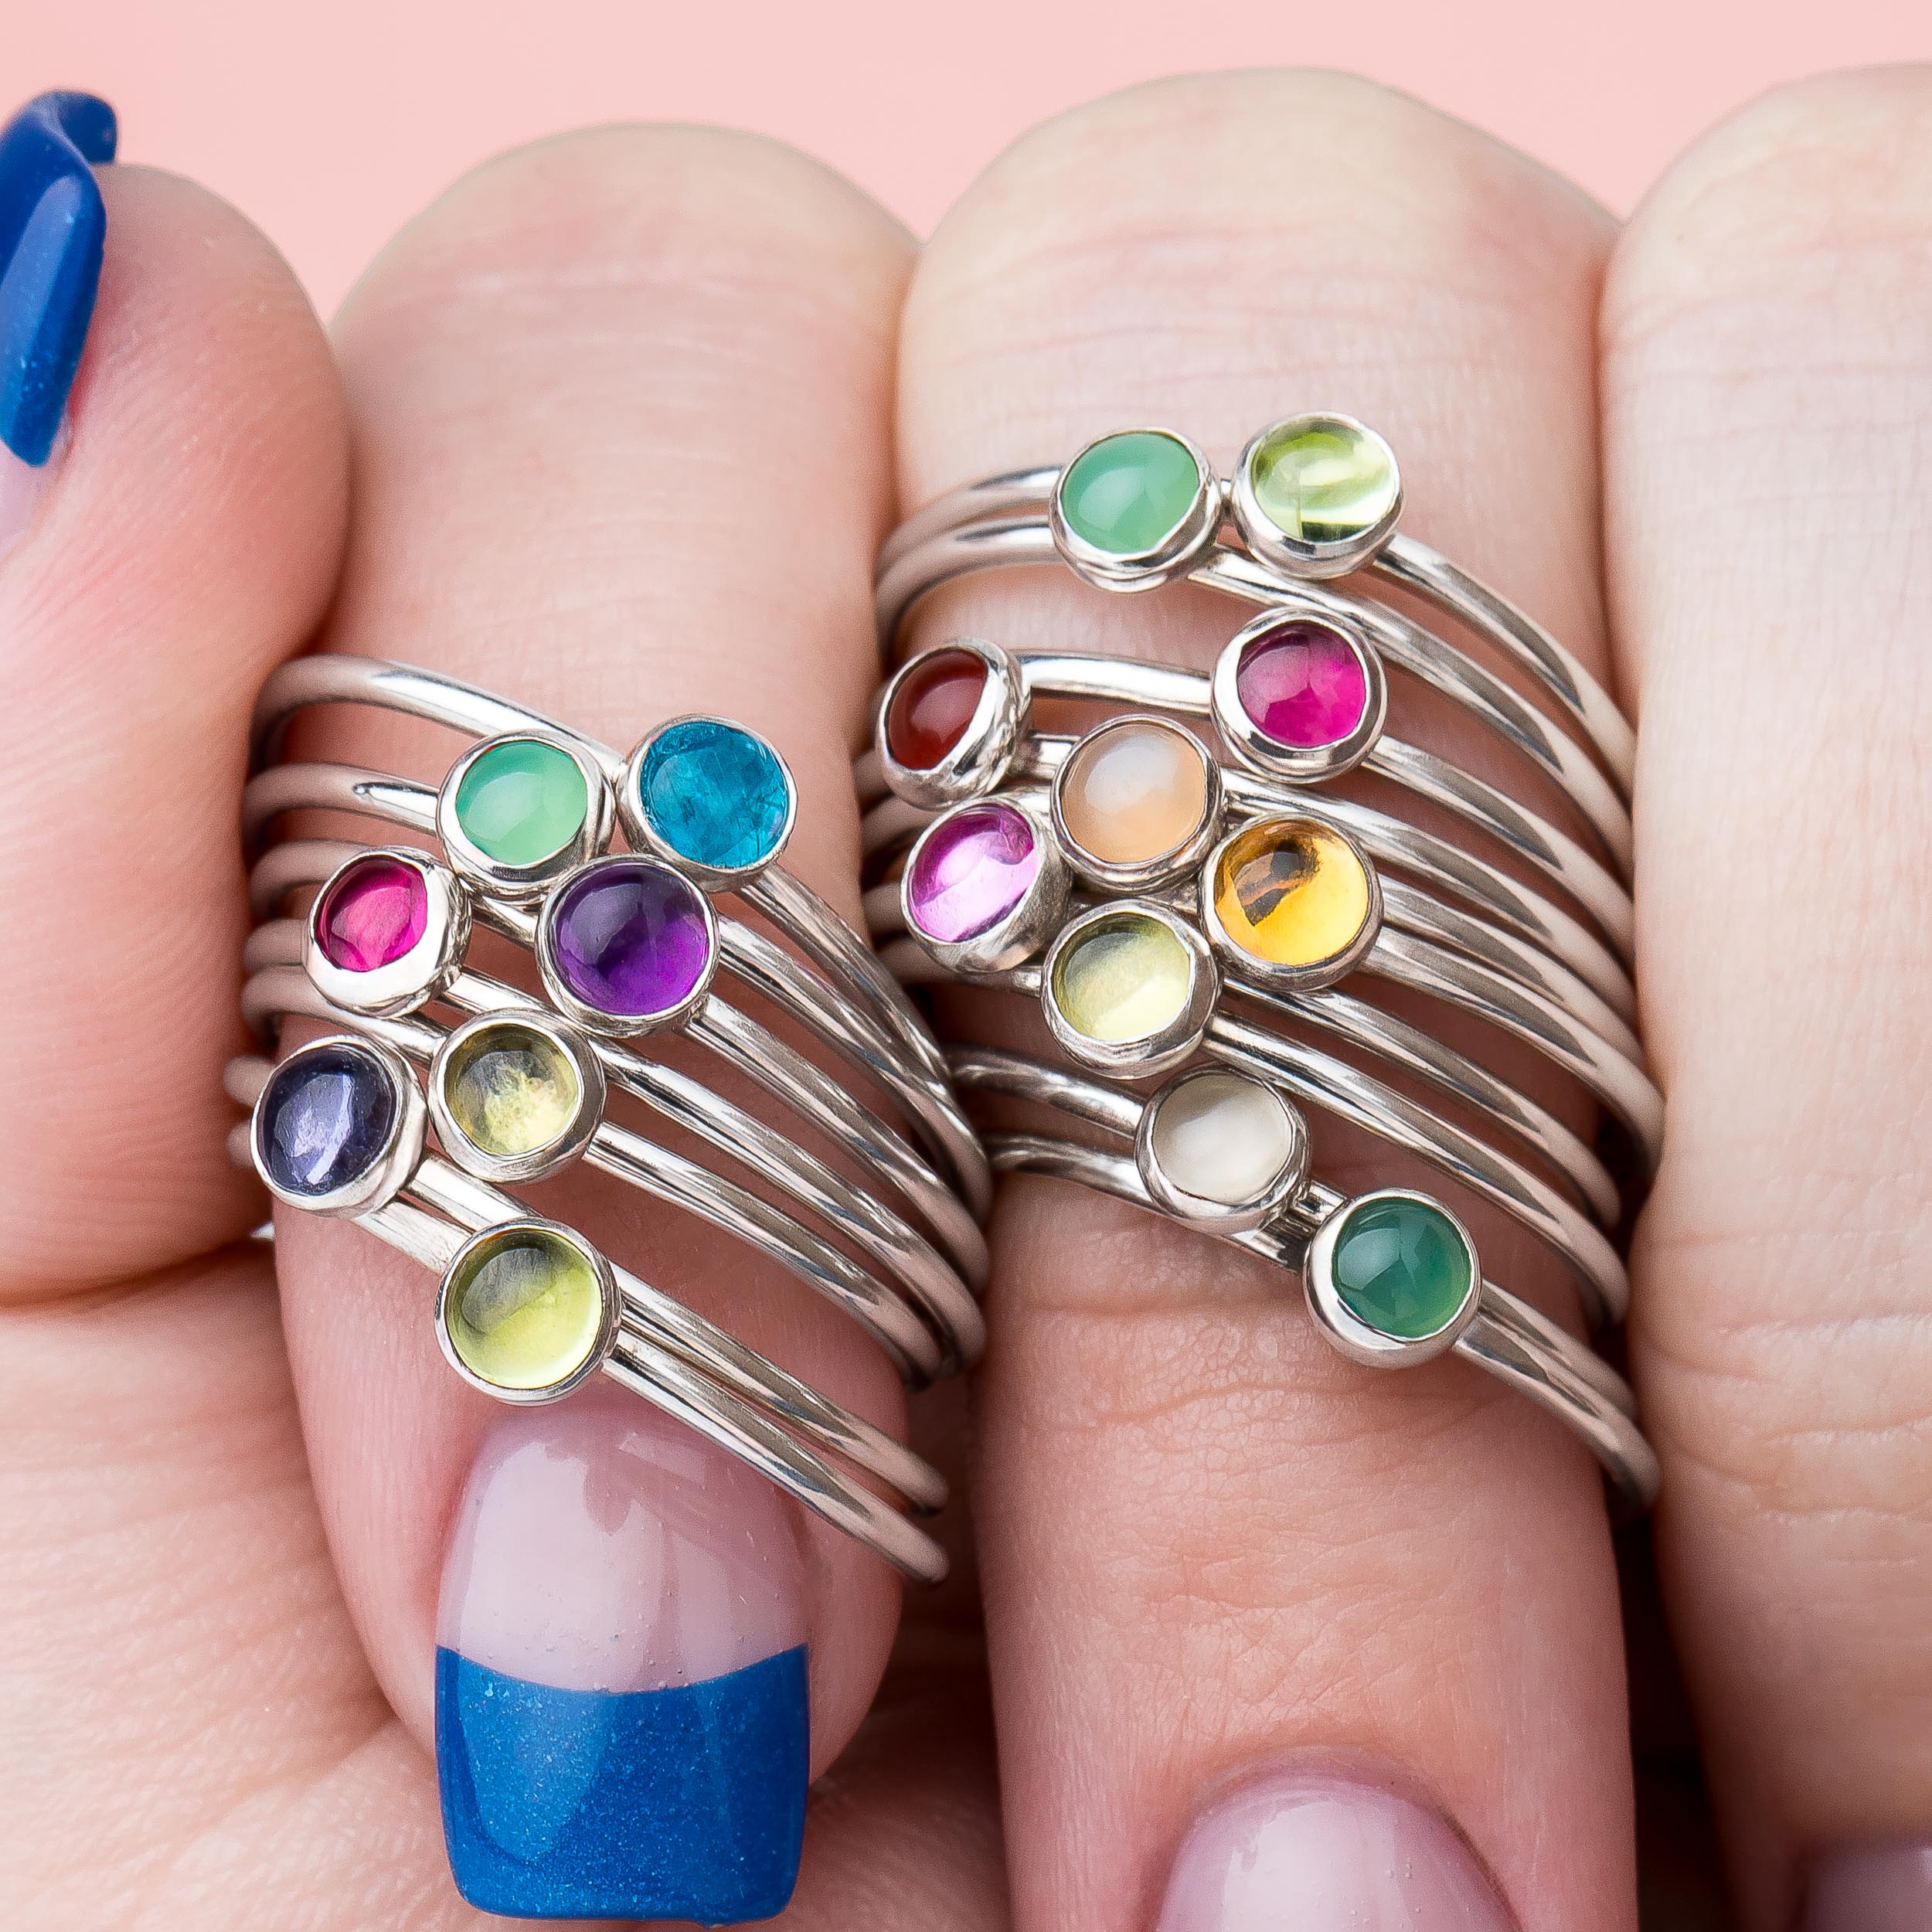 Aurelia Gemstone Ring - Melanie Golden Jewelry - _badge_NEW, gemstone rings, new, rings, stacking rings